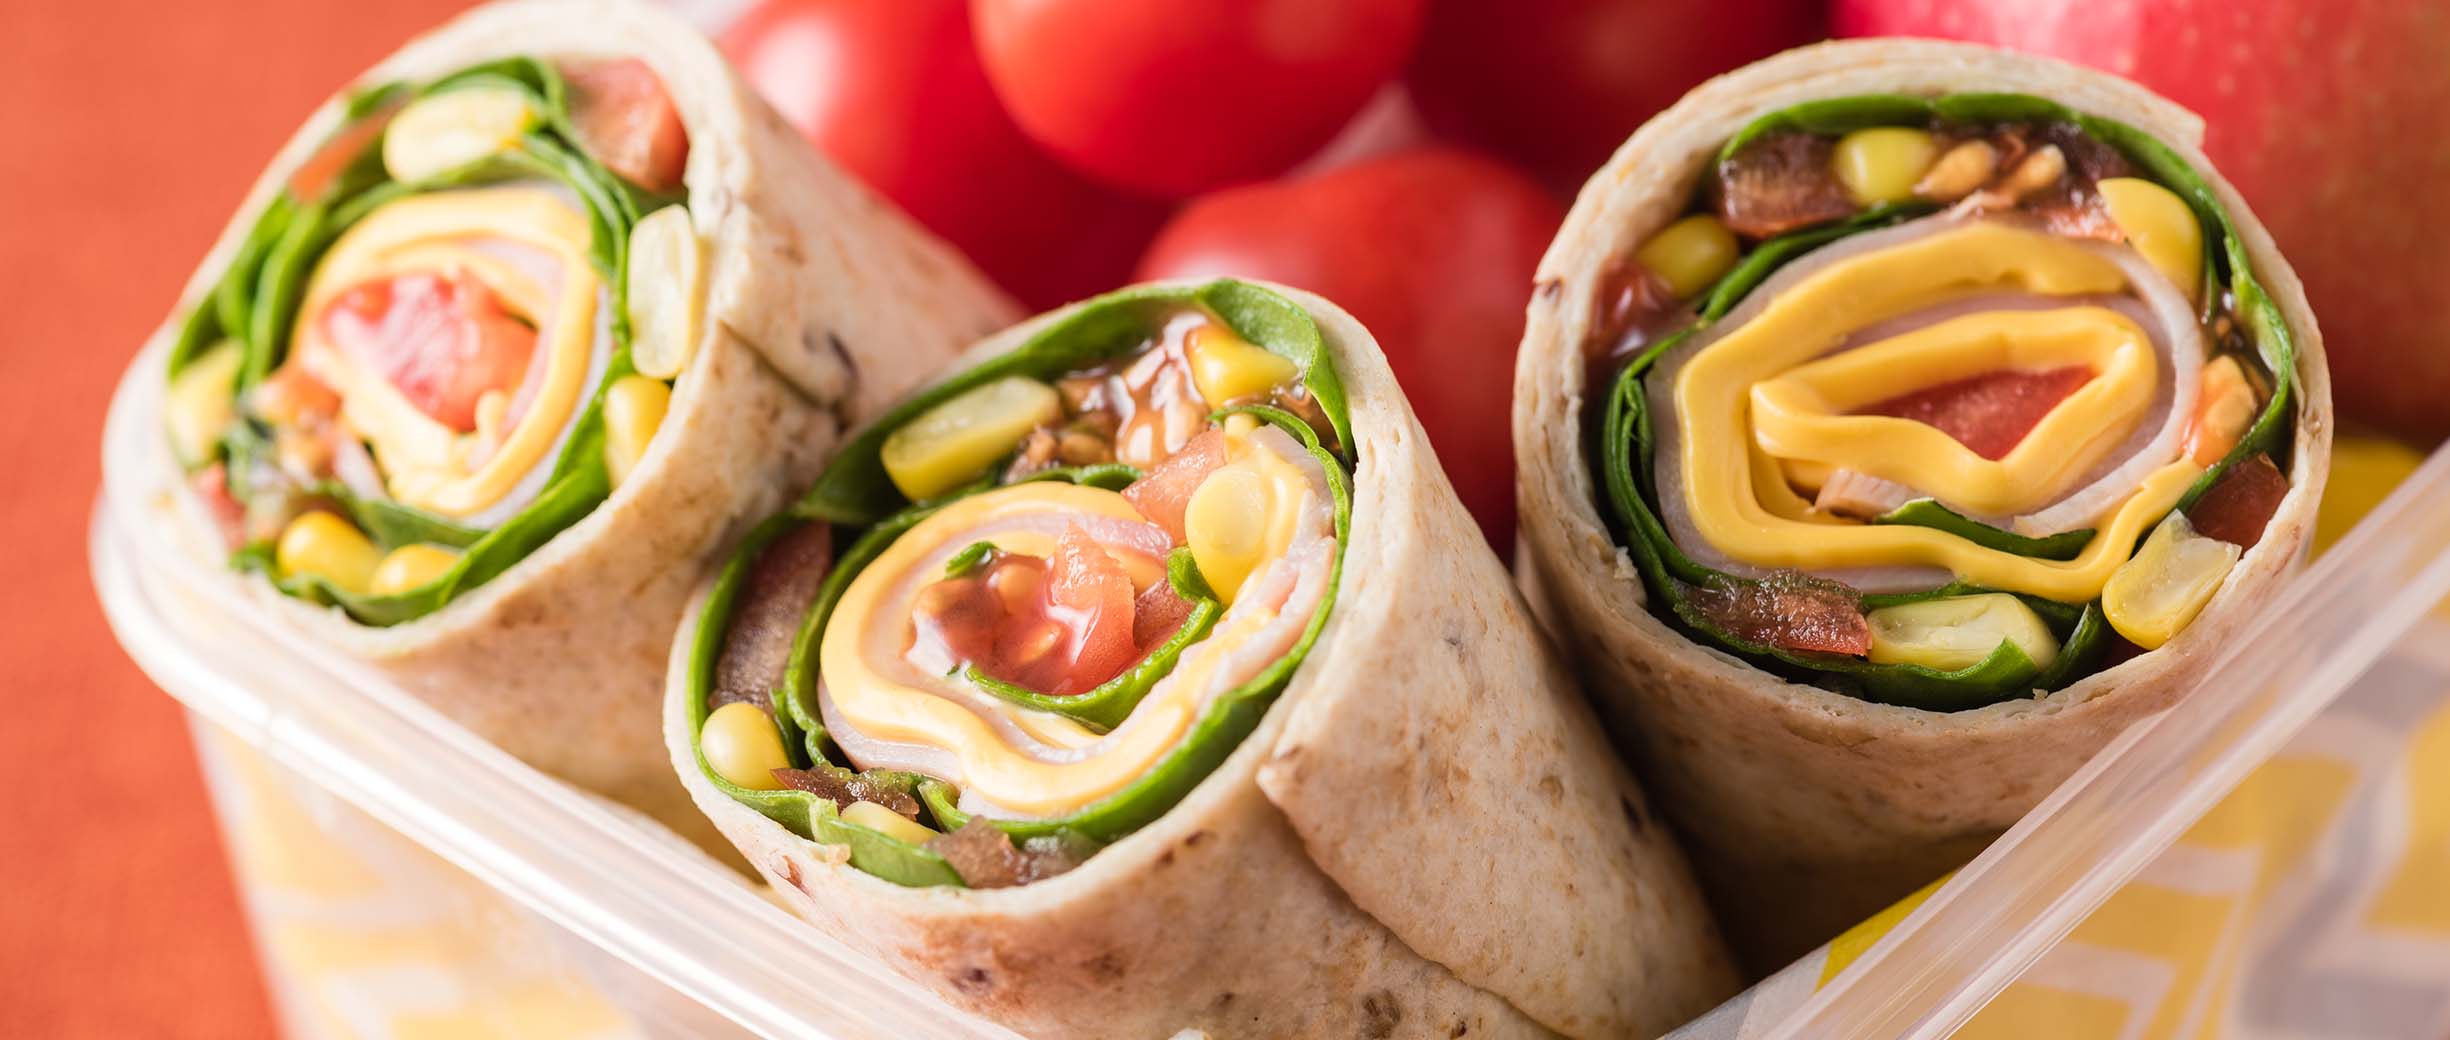 15 Non-Sandwich Lunchbox Ideas